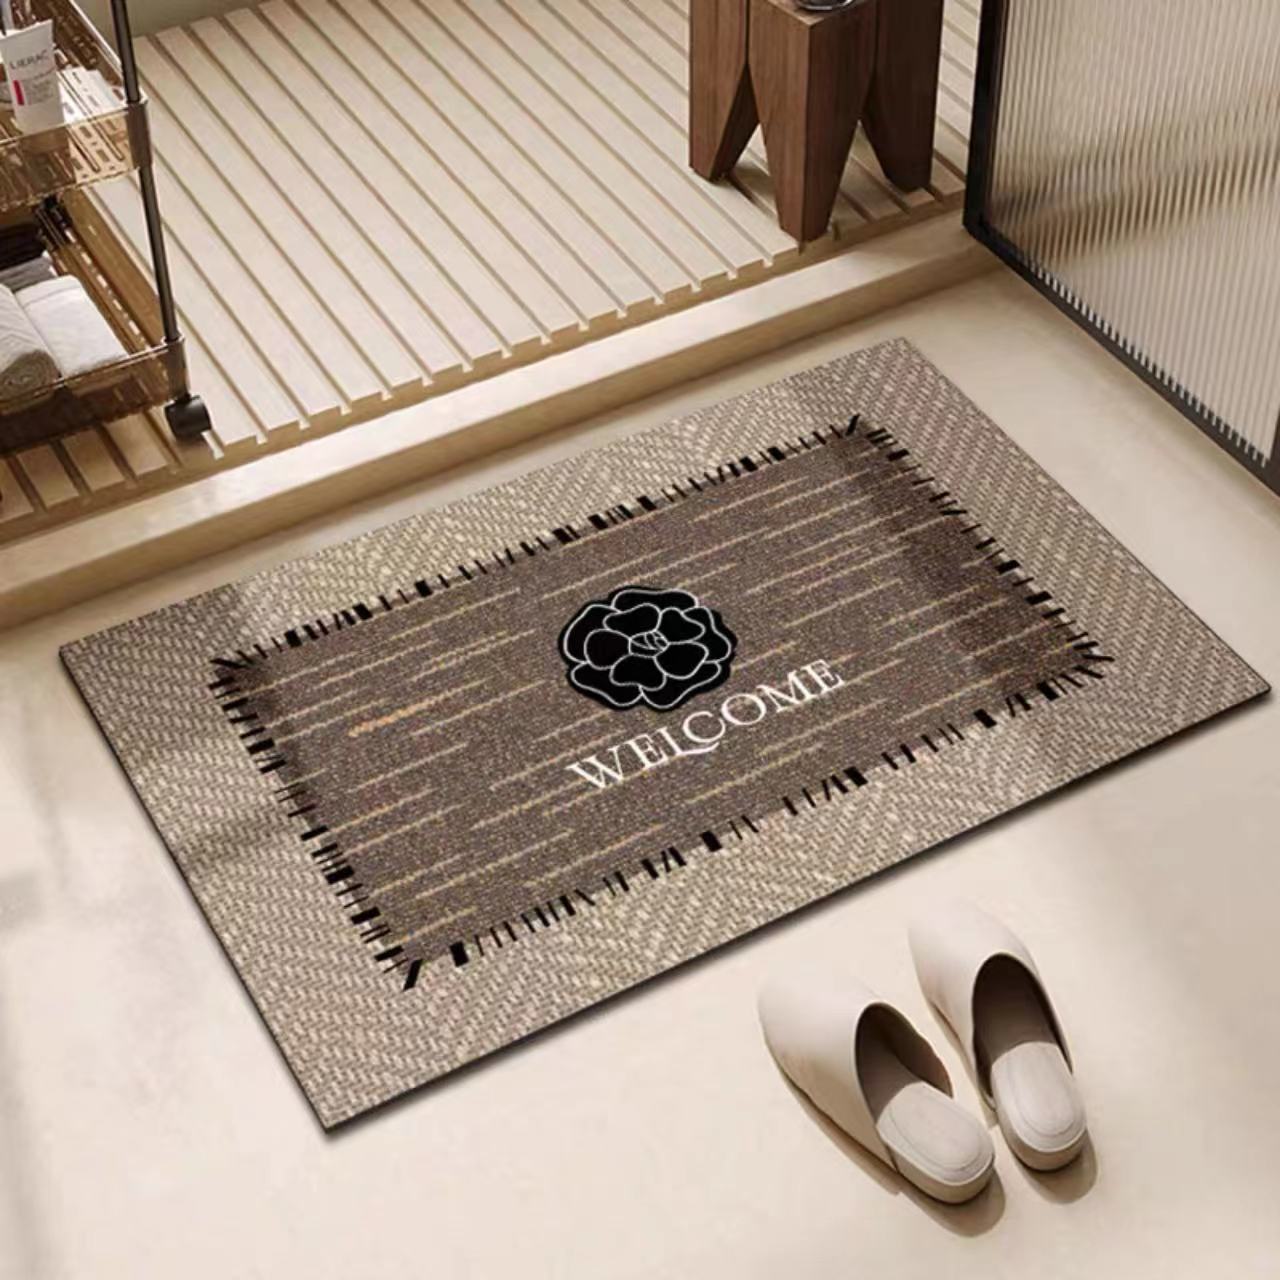 Xiaoxiangfeng bathroom toilet absorbent floor mat French bathroom carpet soft diatom mud toilet mat non-slip floor mat